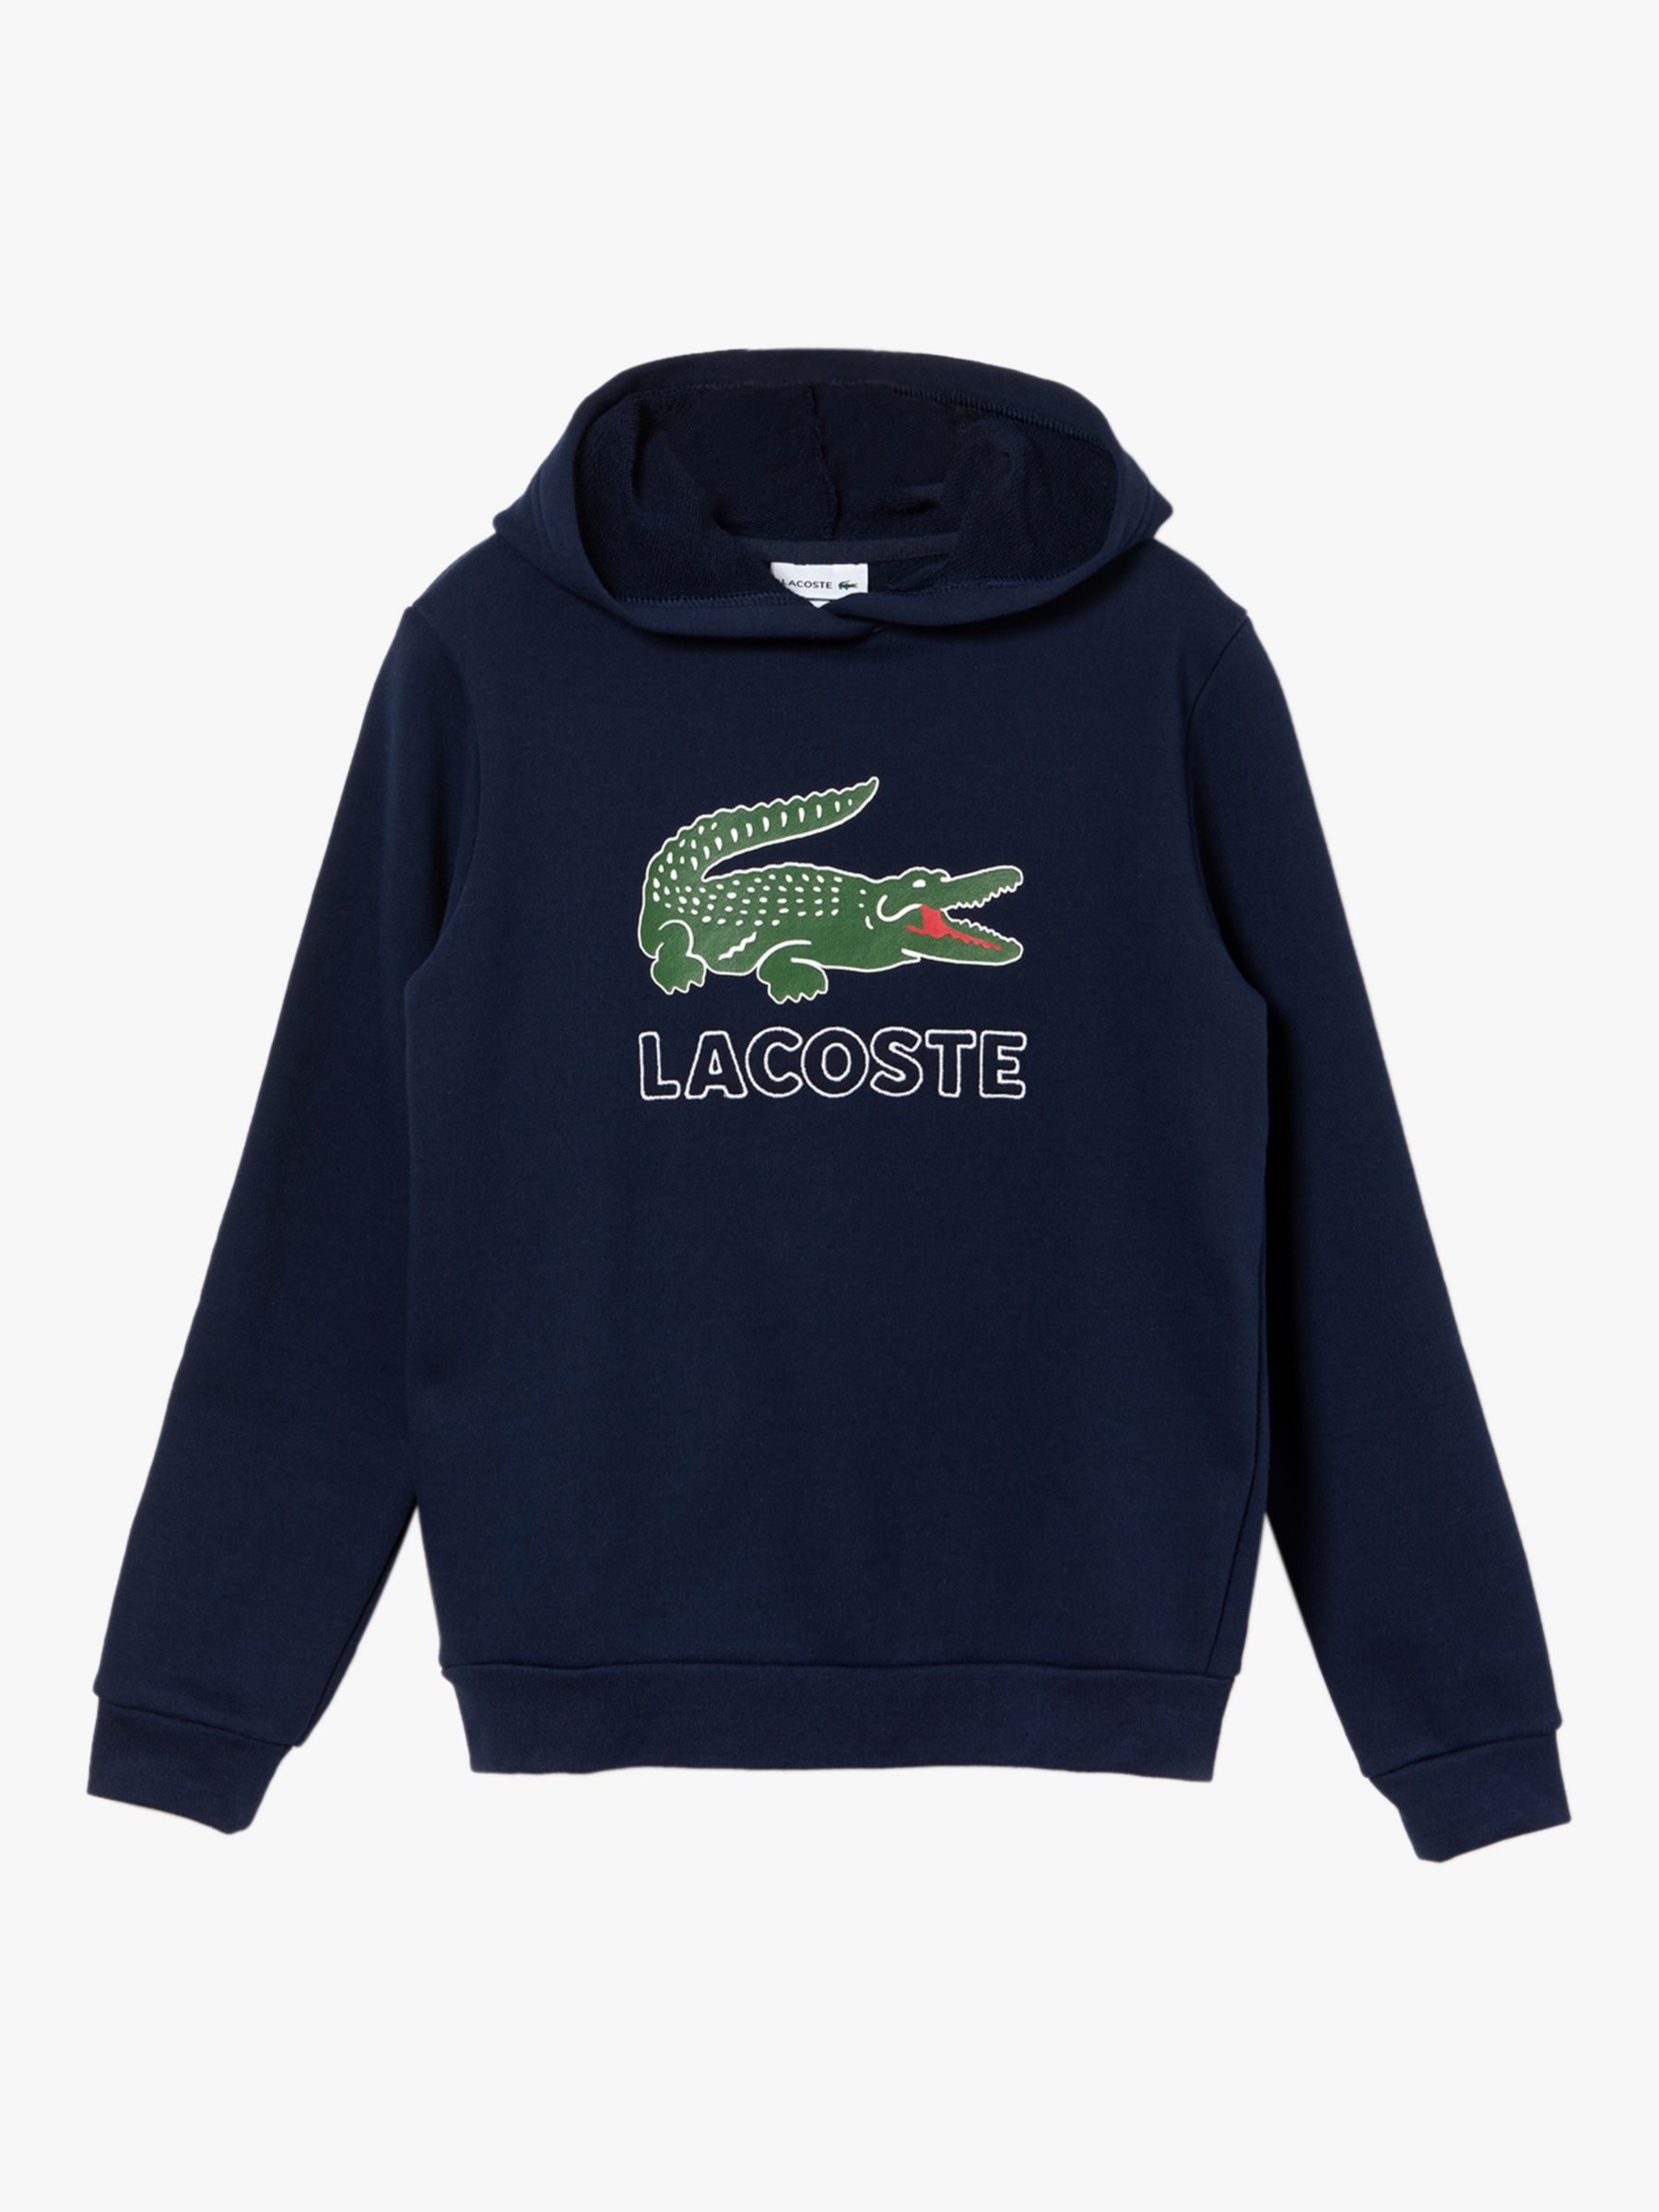 Lacoste Boys' Logo Hoodie, Navy